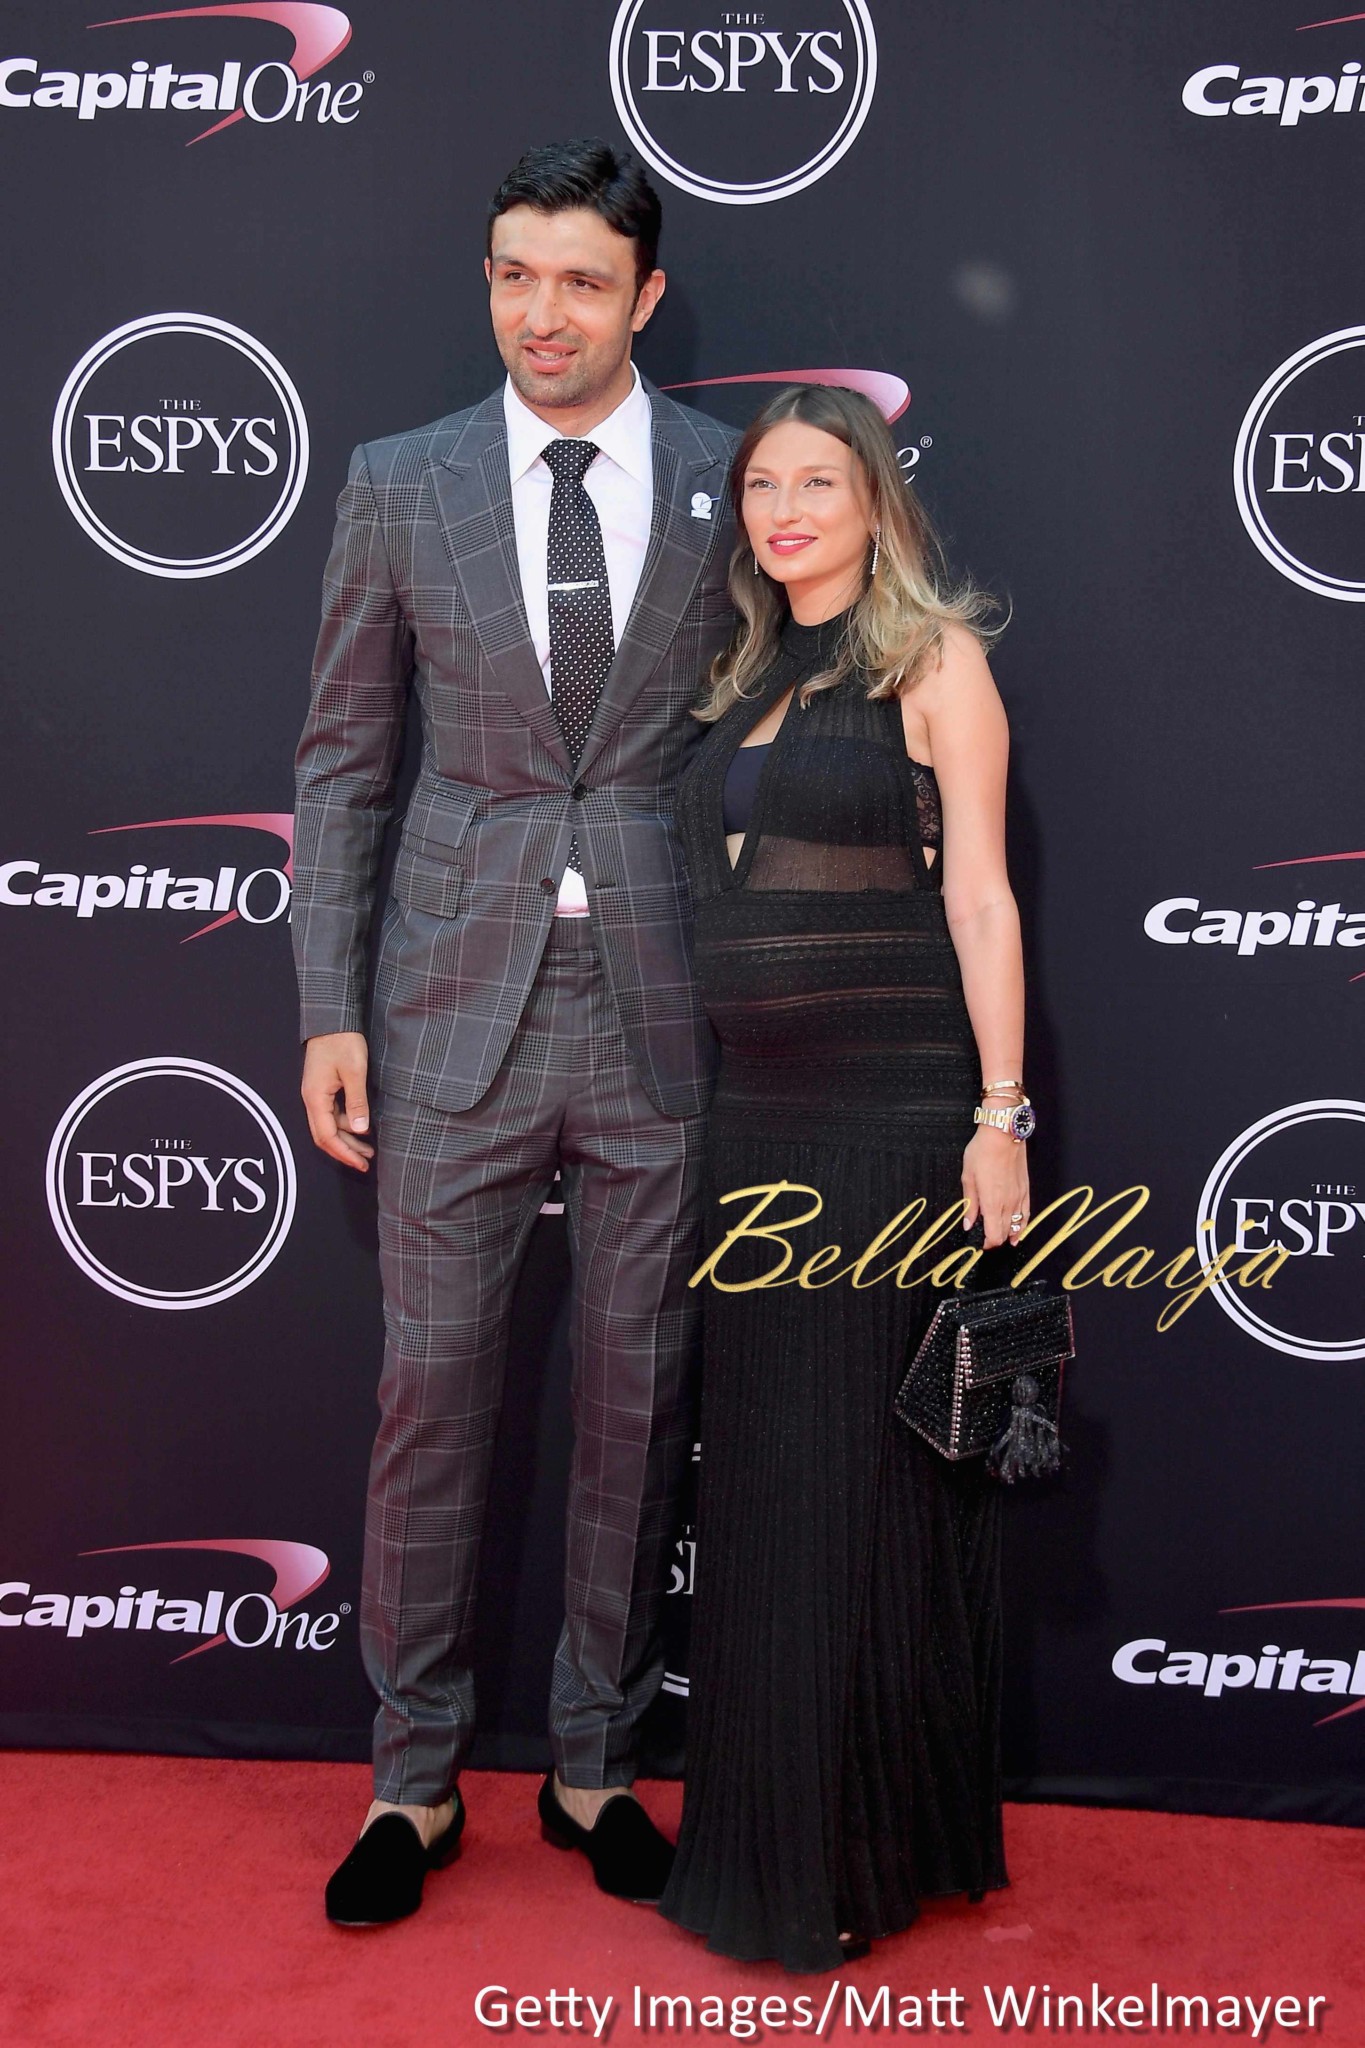 BellaNaija - Michael Phelps, John Cena, Laurie Hernandez... Photos from The ESPY Awards 2017